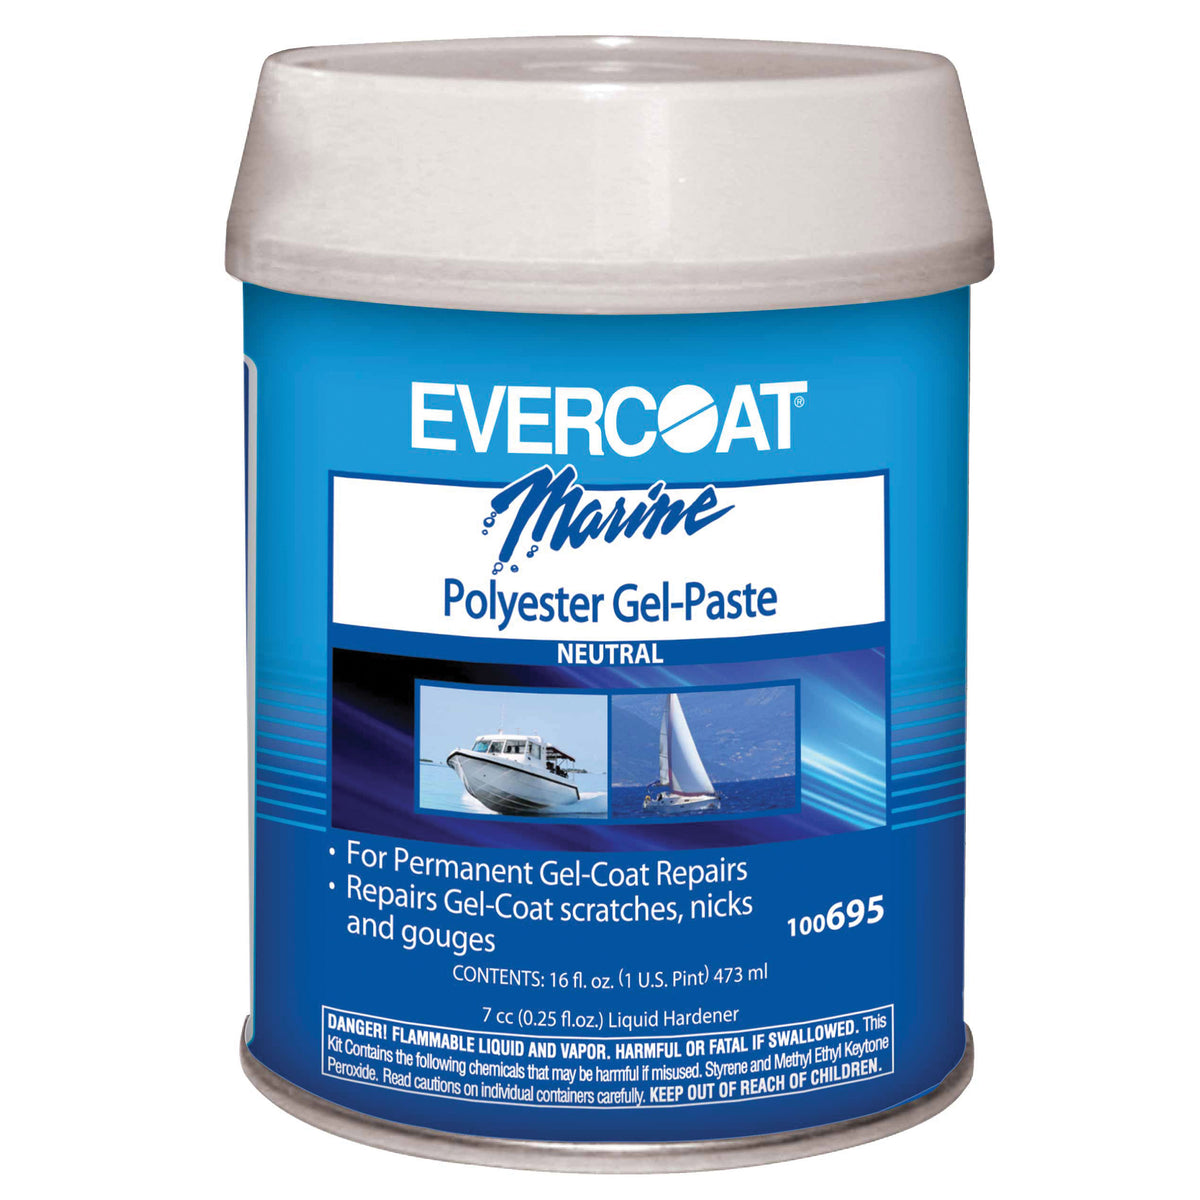 Evercoat 100695 Polyester Gel Paste - Neutral, Pint